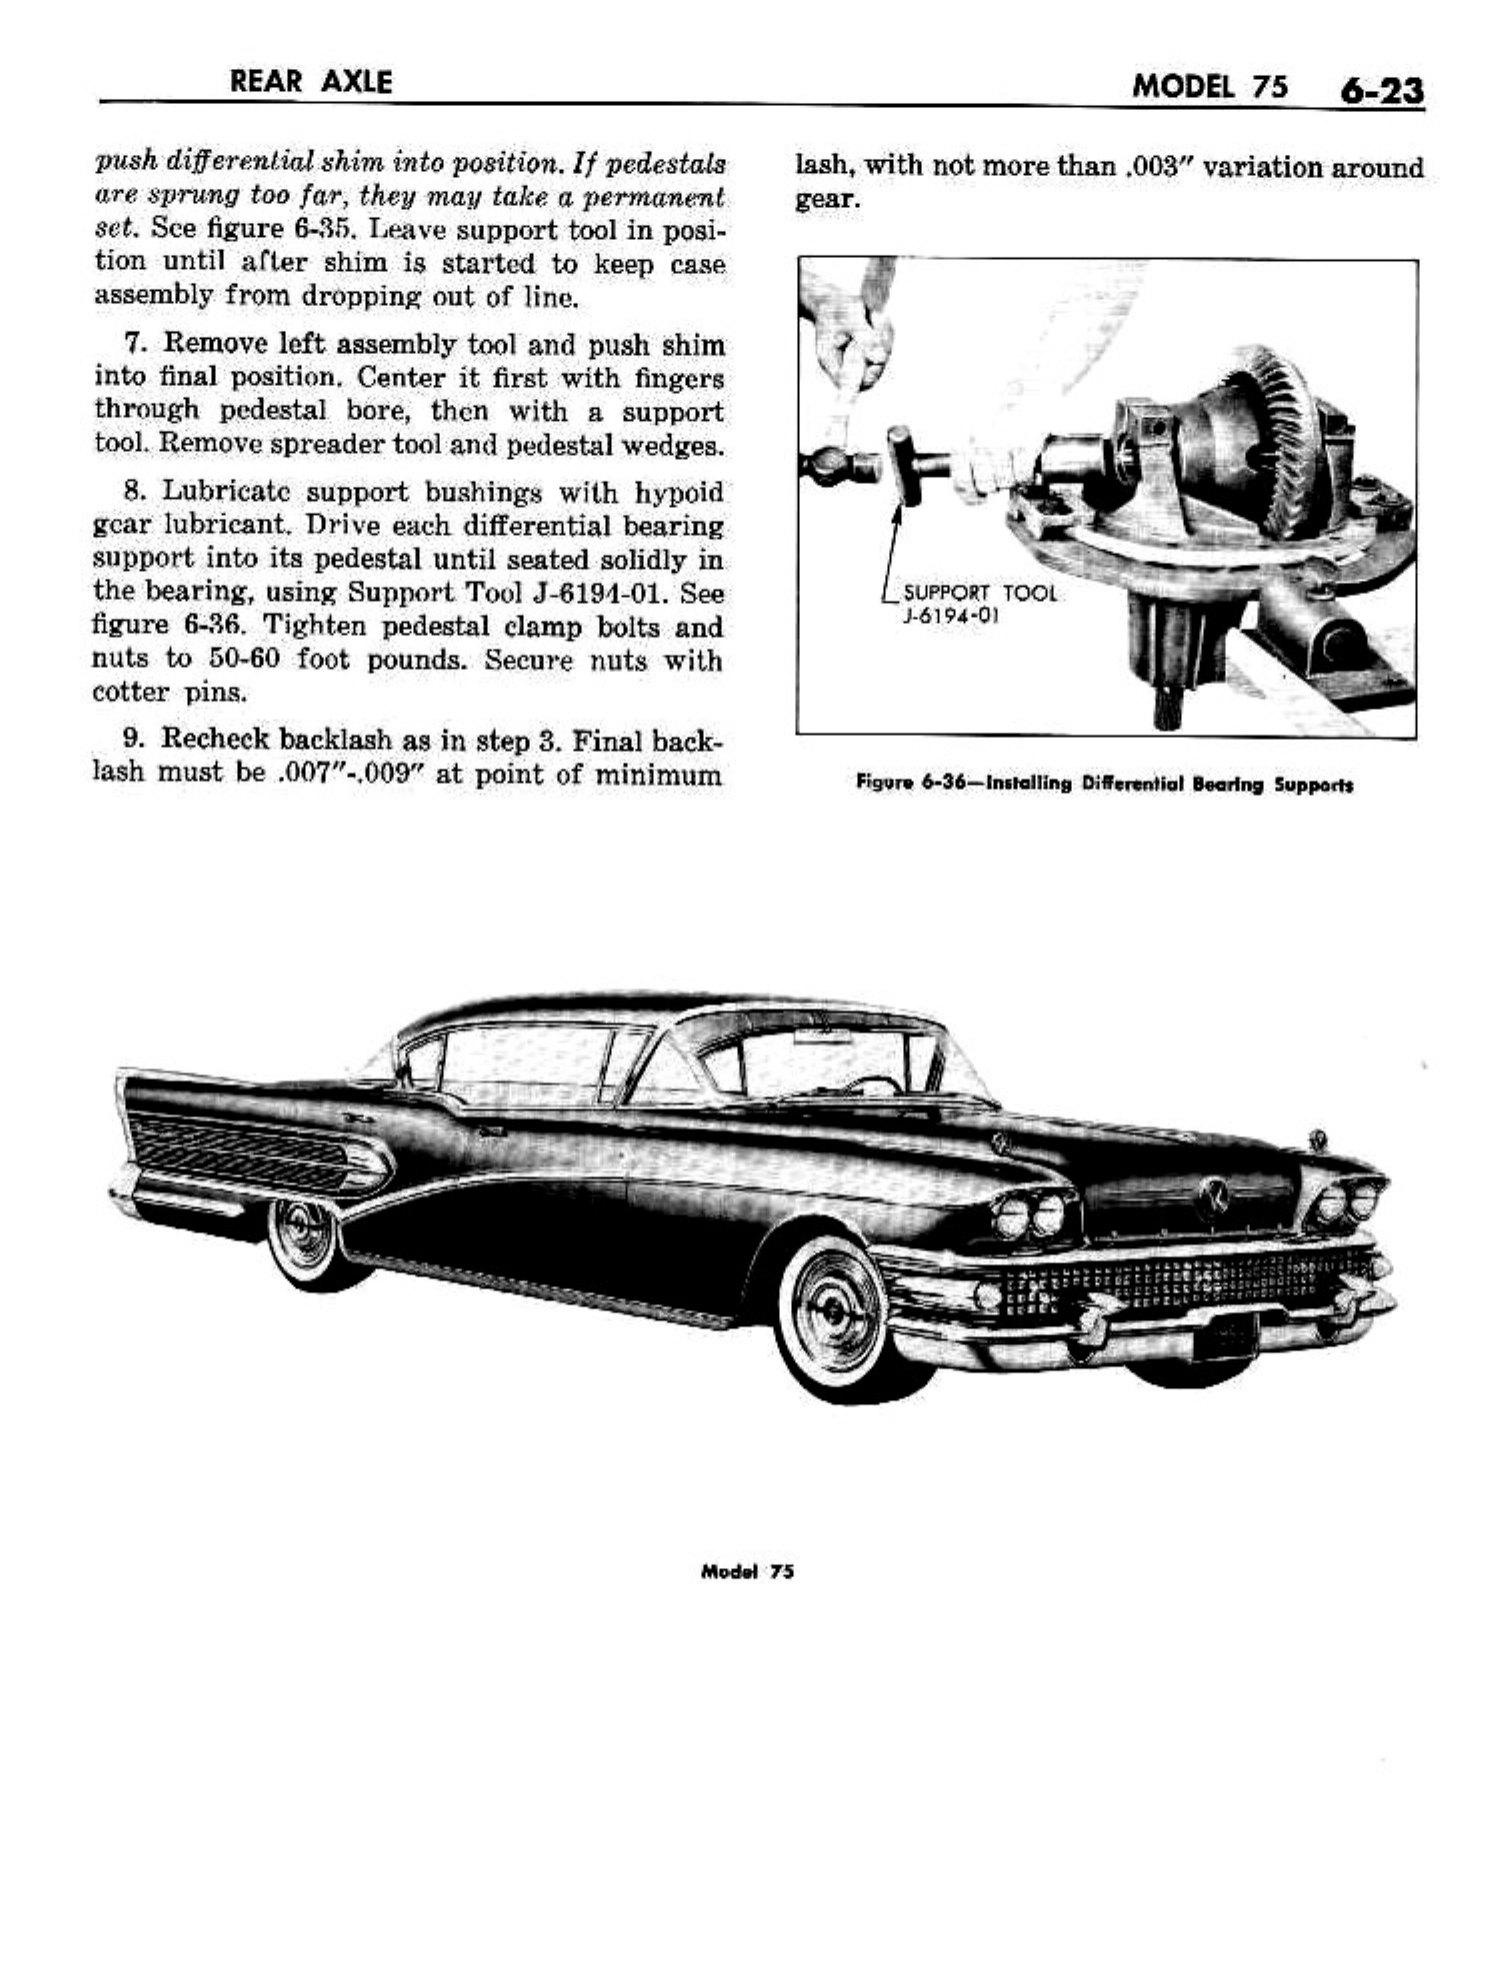 n_07 1958 Buick Shop Manual - Rear Axle_23.jpg